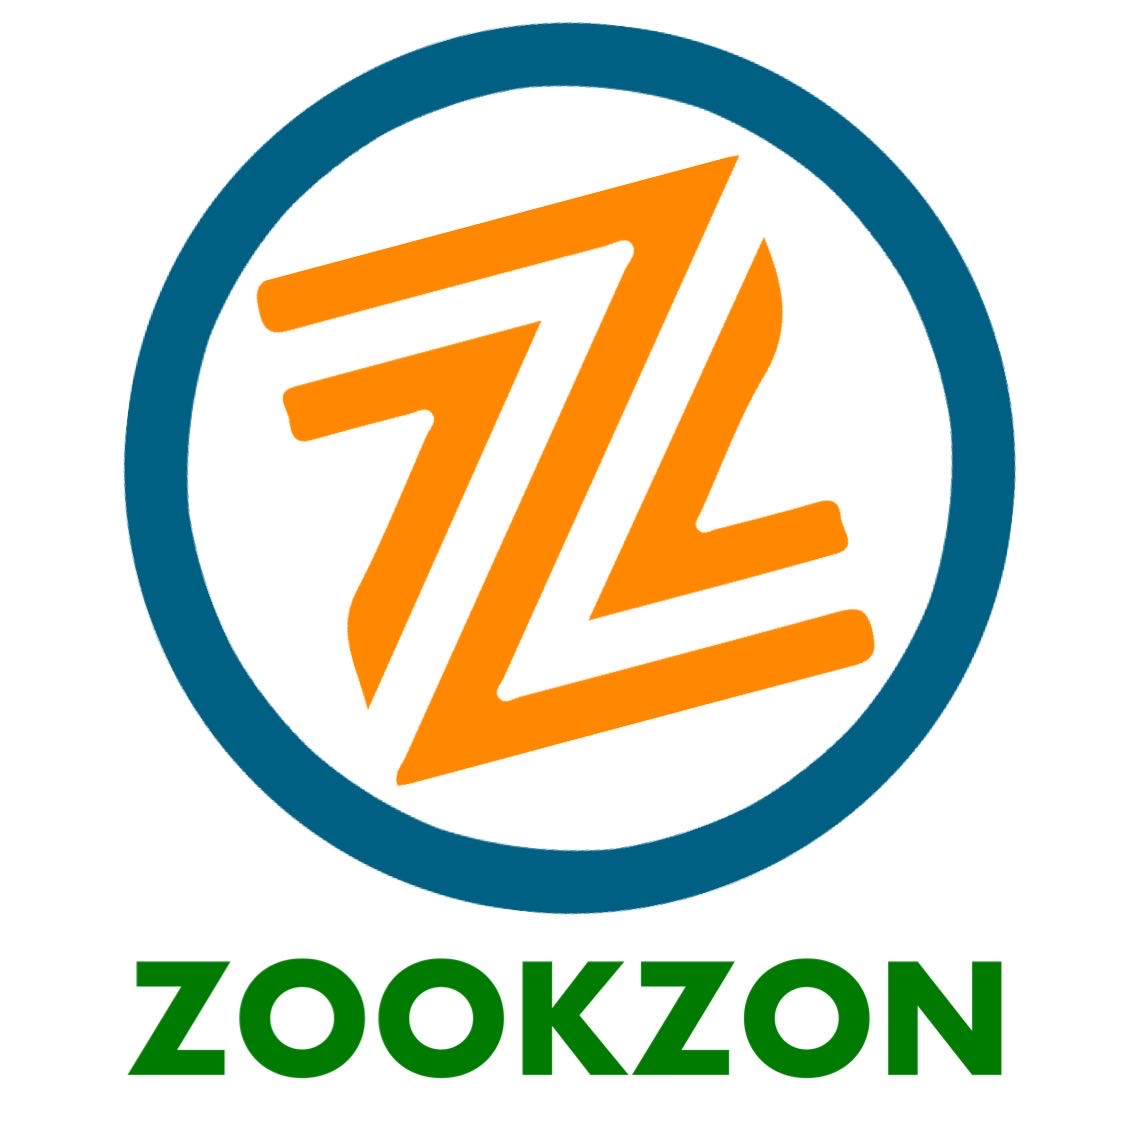 zookzon.com